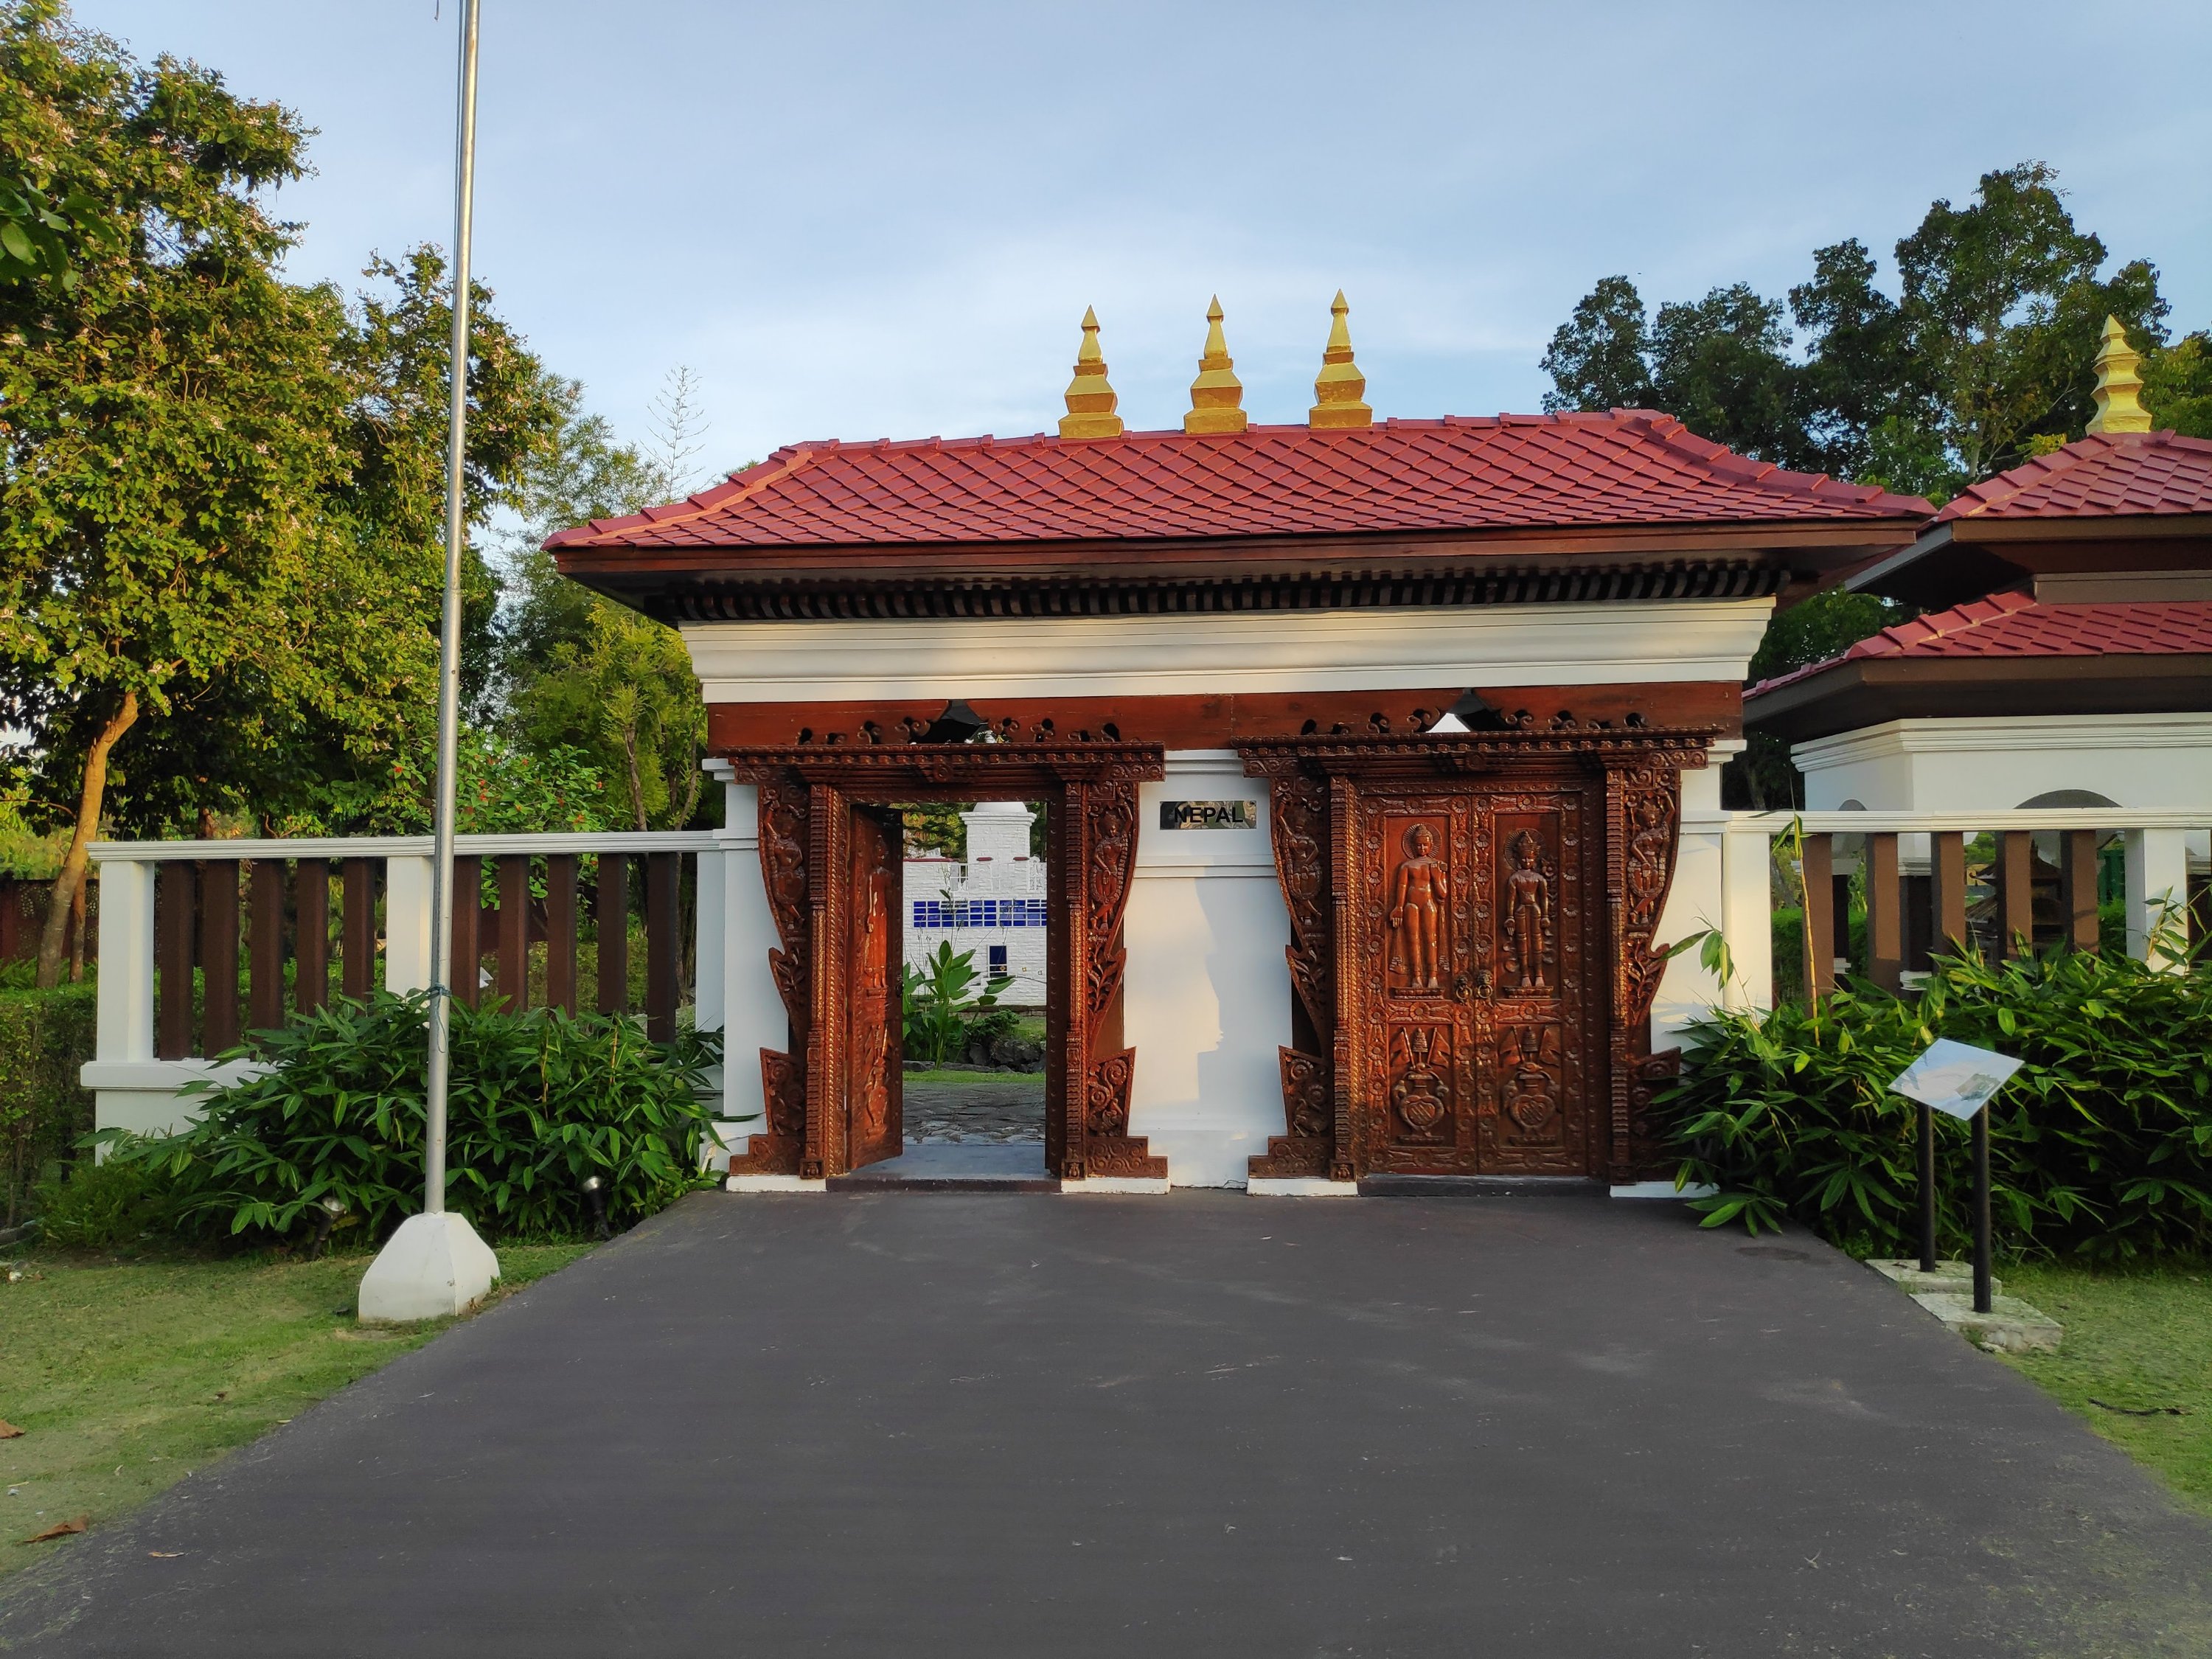 Di taman Indonesia dibuat ada Joglo dan pintu selamat datang ala Bali Tanamannya saya ga tahu namanya hehhee Selain taman Indonesia ada taman Cina